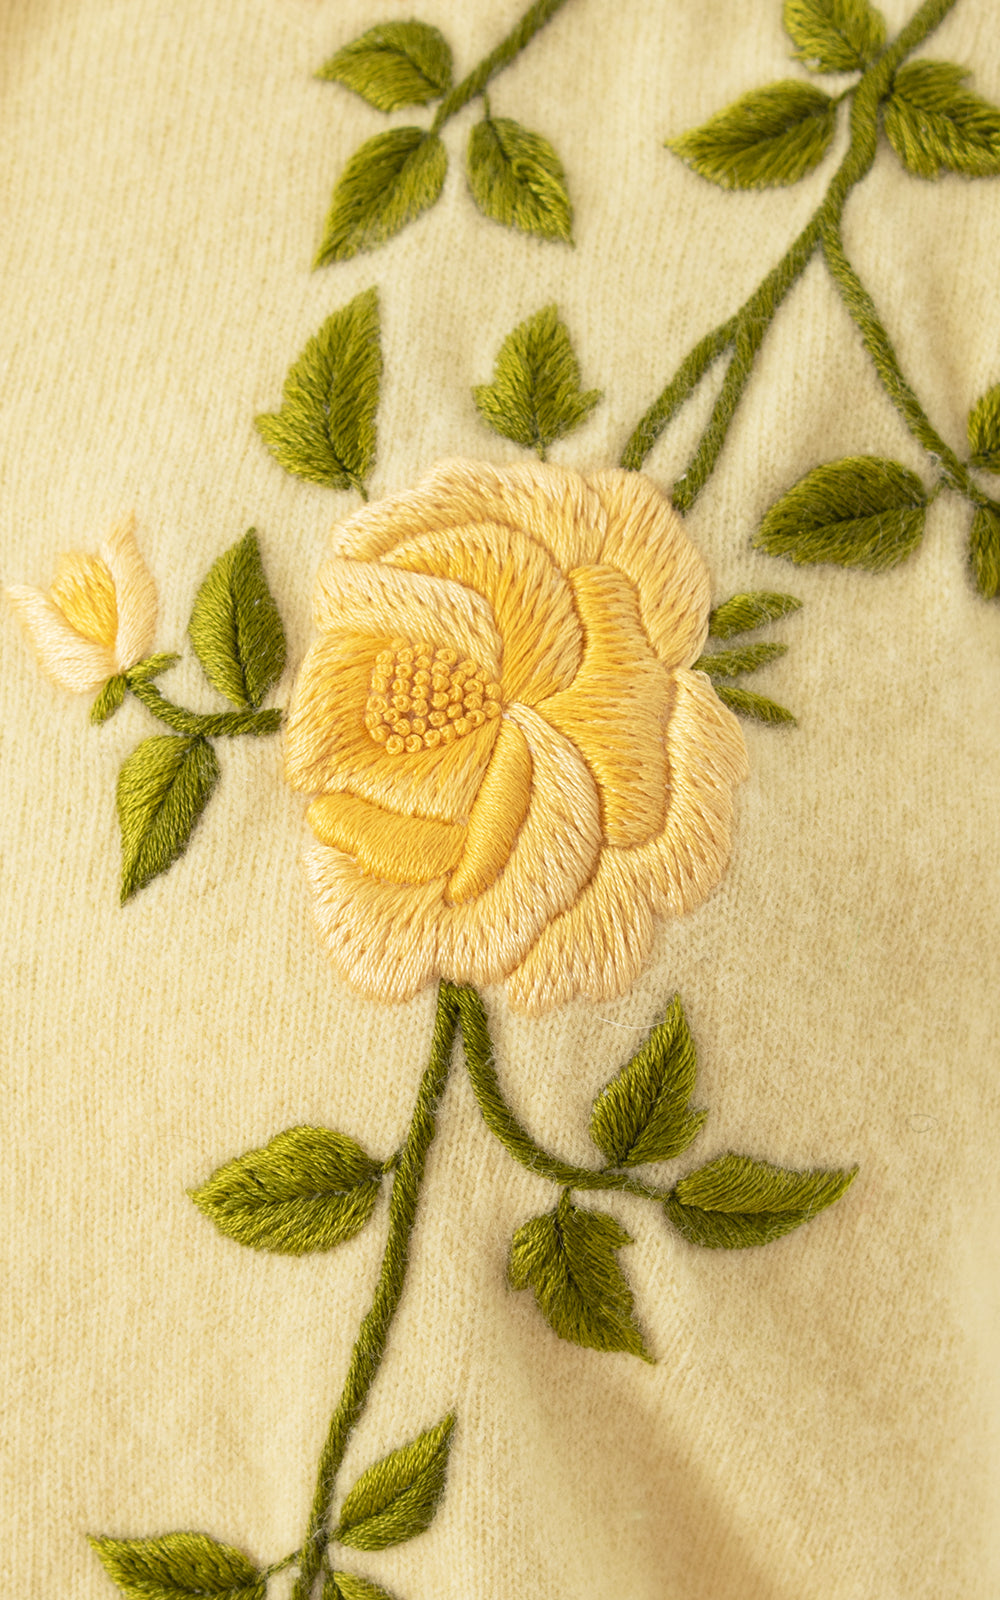 1950s Rose Embroidered Knit Wool Angora Cardigan | medium/large